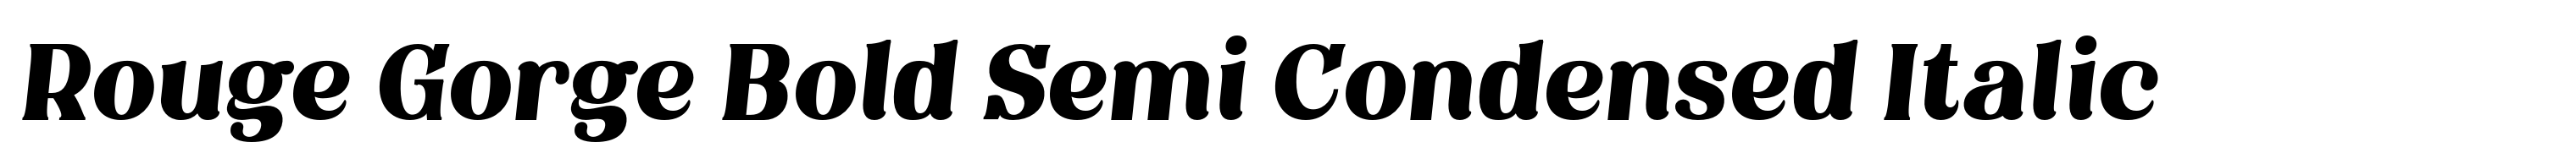 Rouge Gorge Bold Semi Condensed Italic